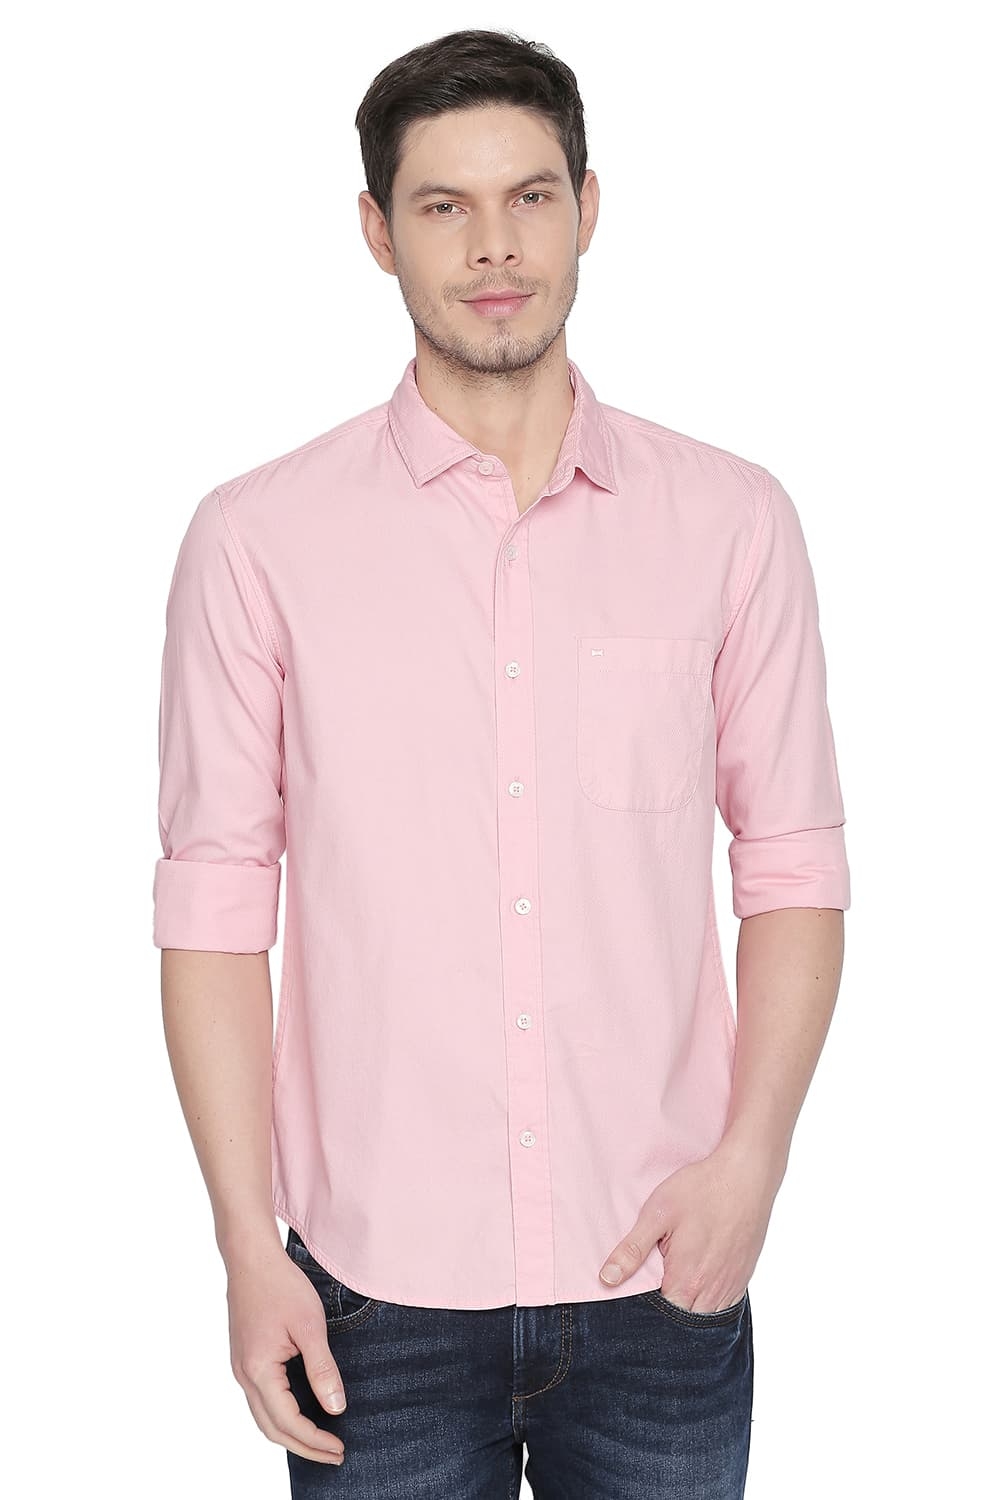 Basics | Basics Slim Fit Quartz Pink Structure Shirt